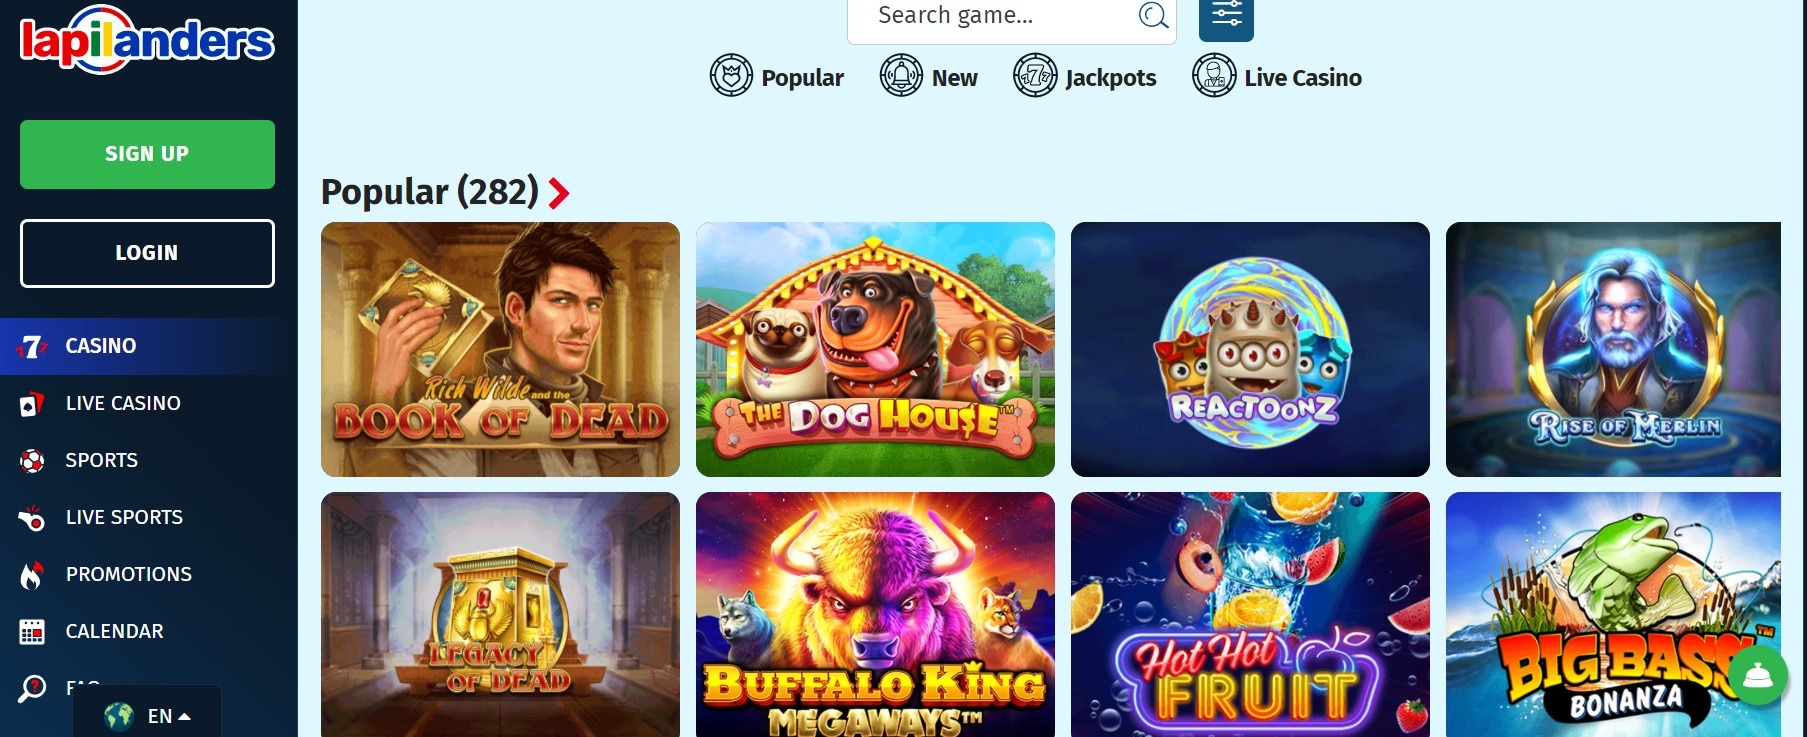 Lapilanders Casino Banner Games